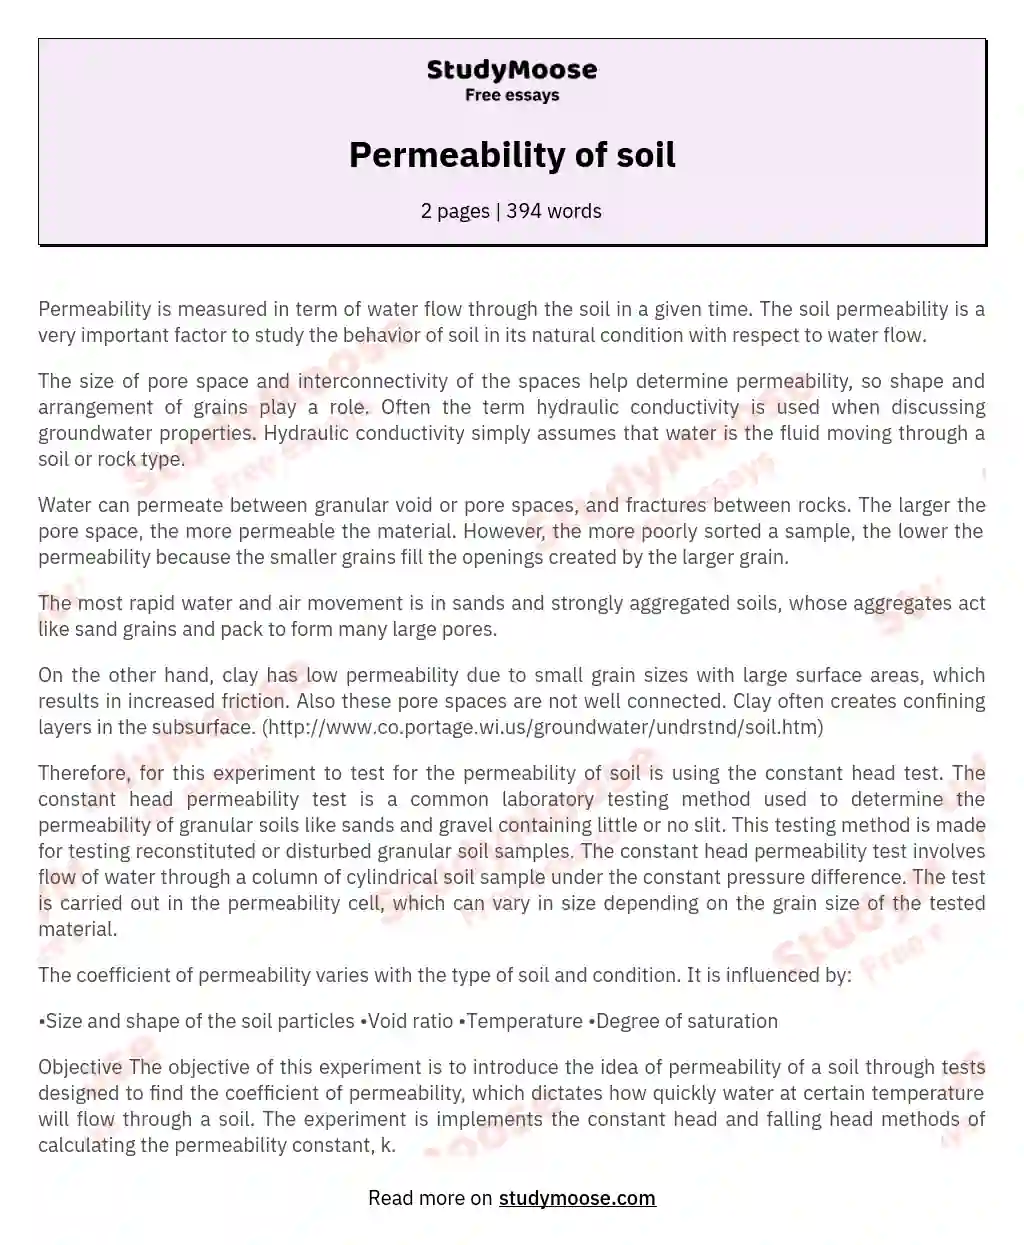 Permeability of soil